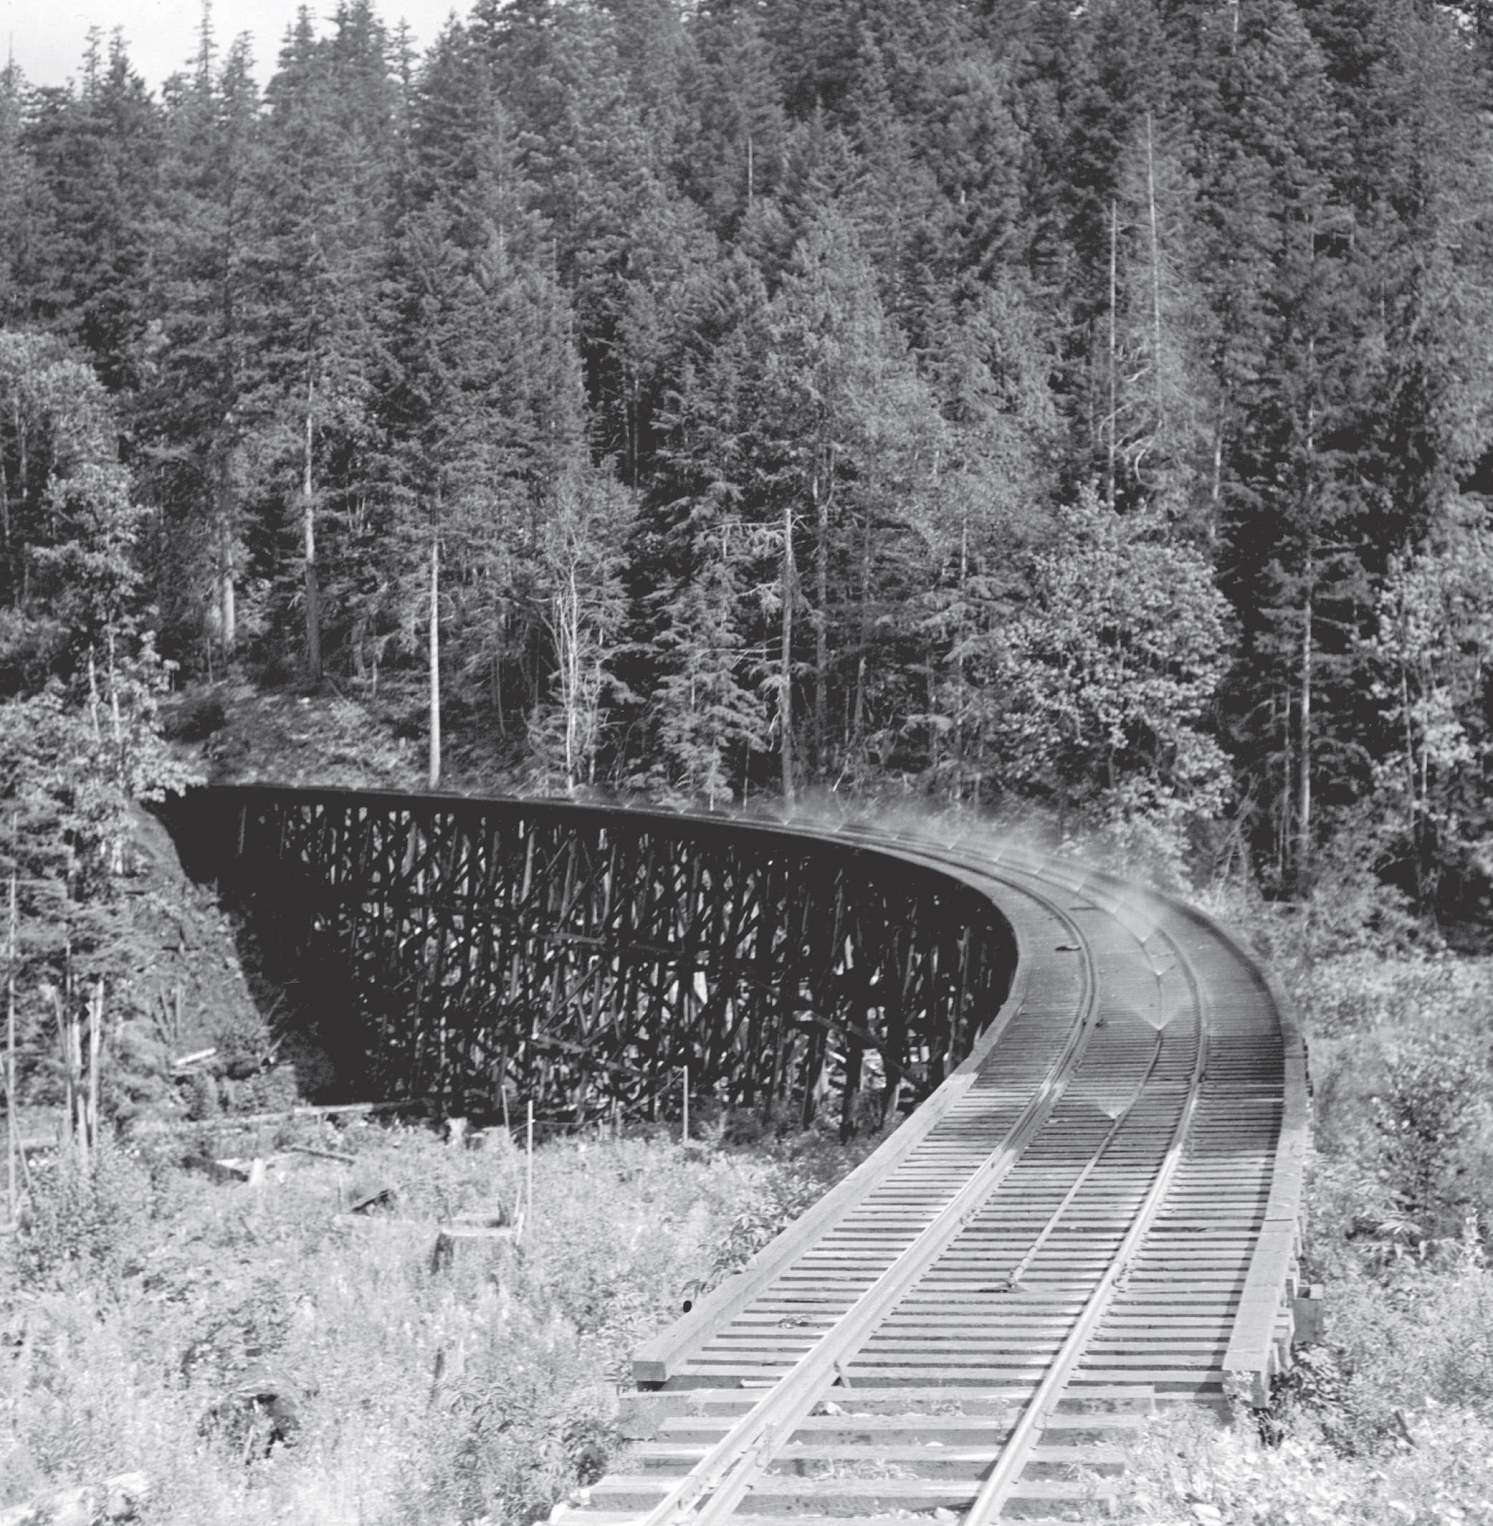 trestle bridge made of timber